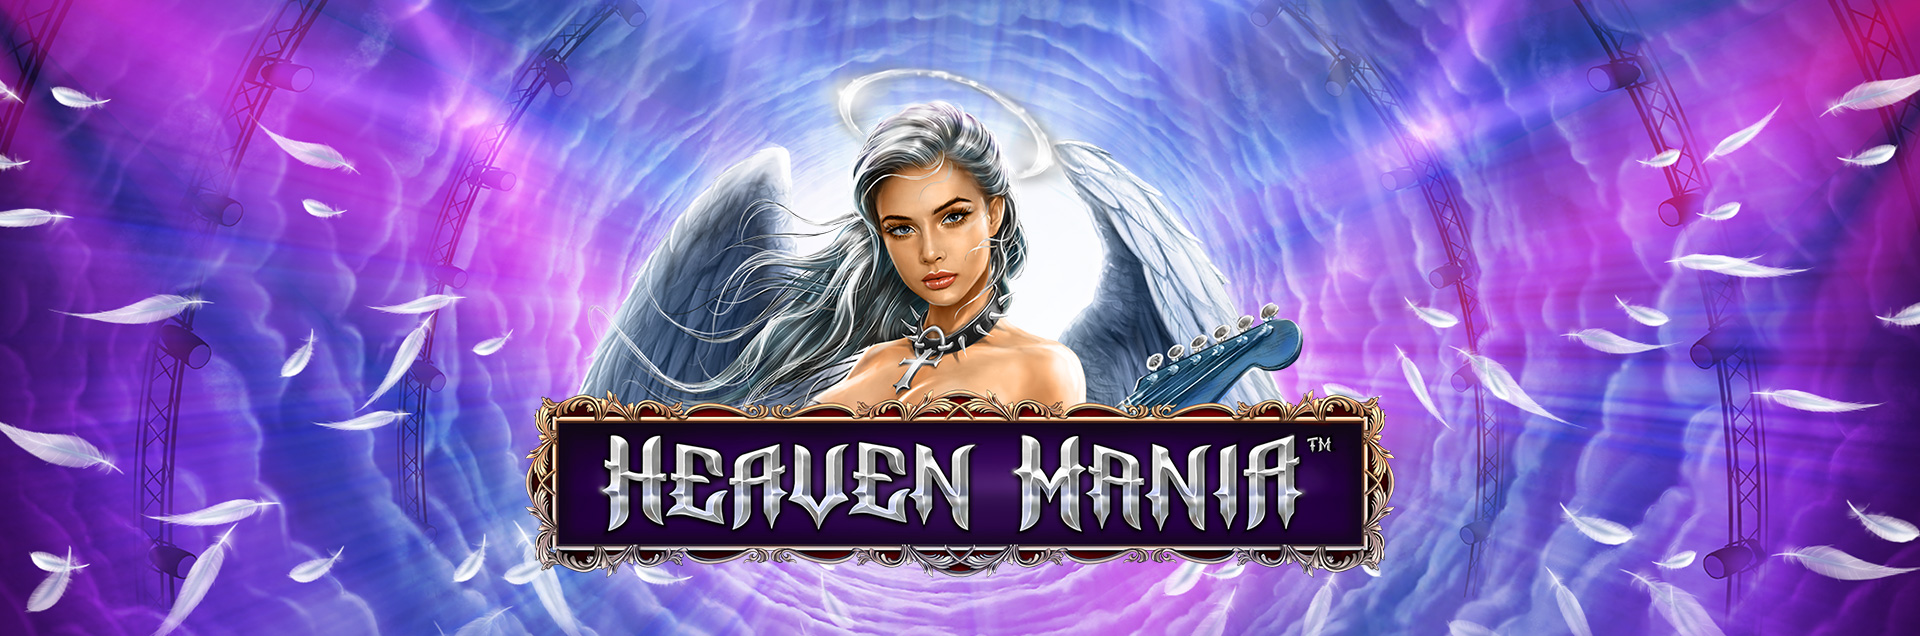 Heaven Mania header games